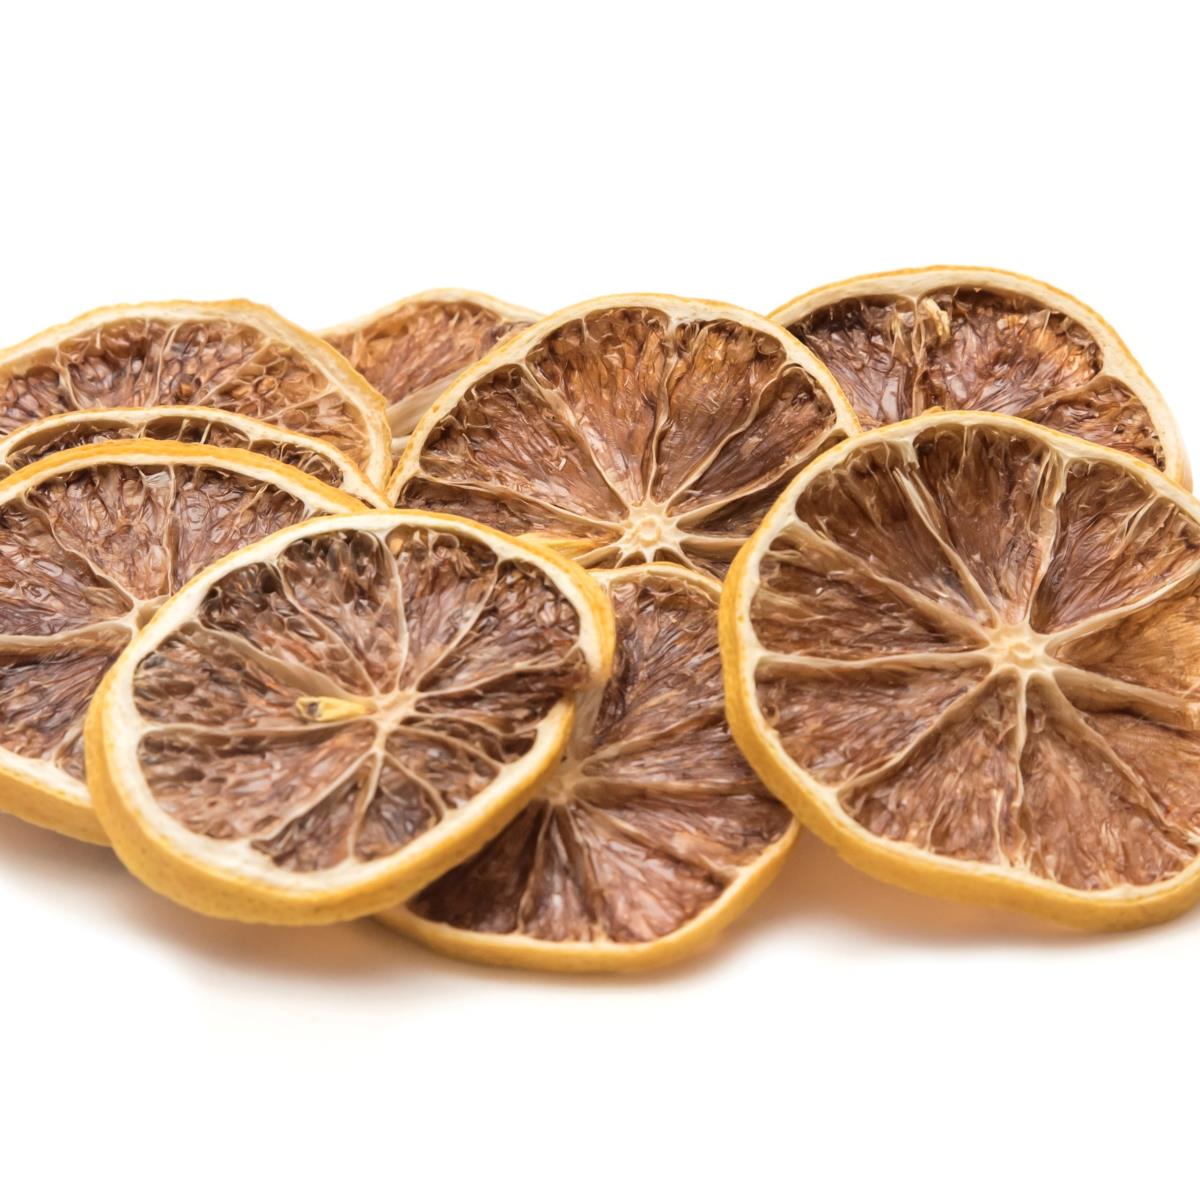 Dried Meyer Lemons